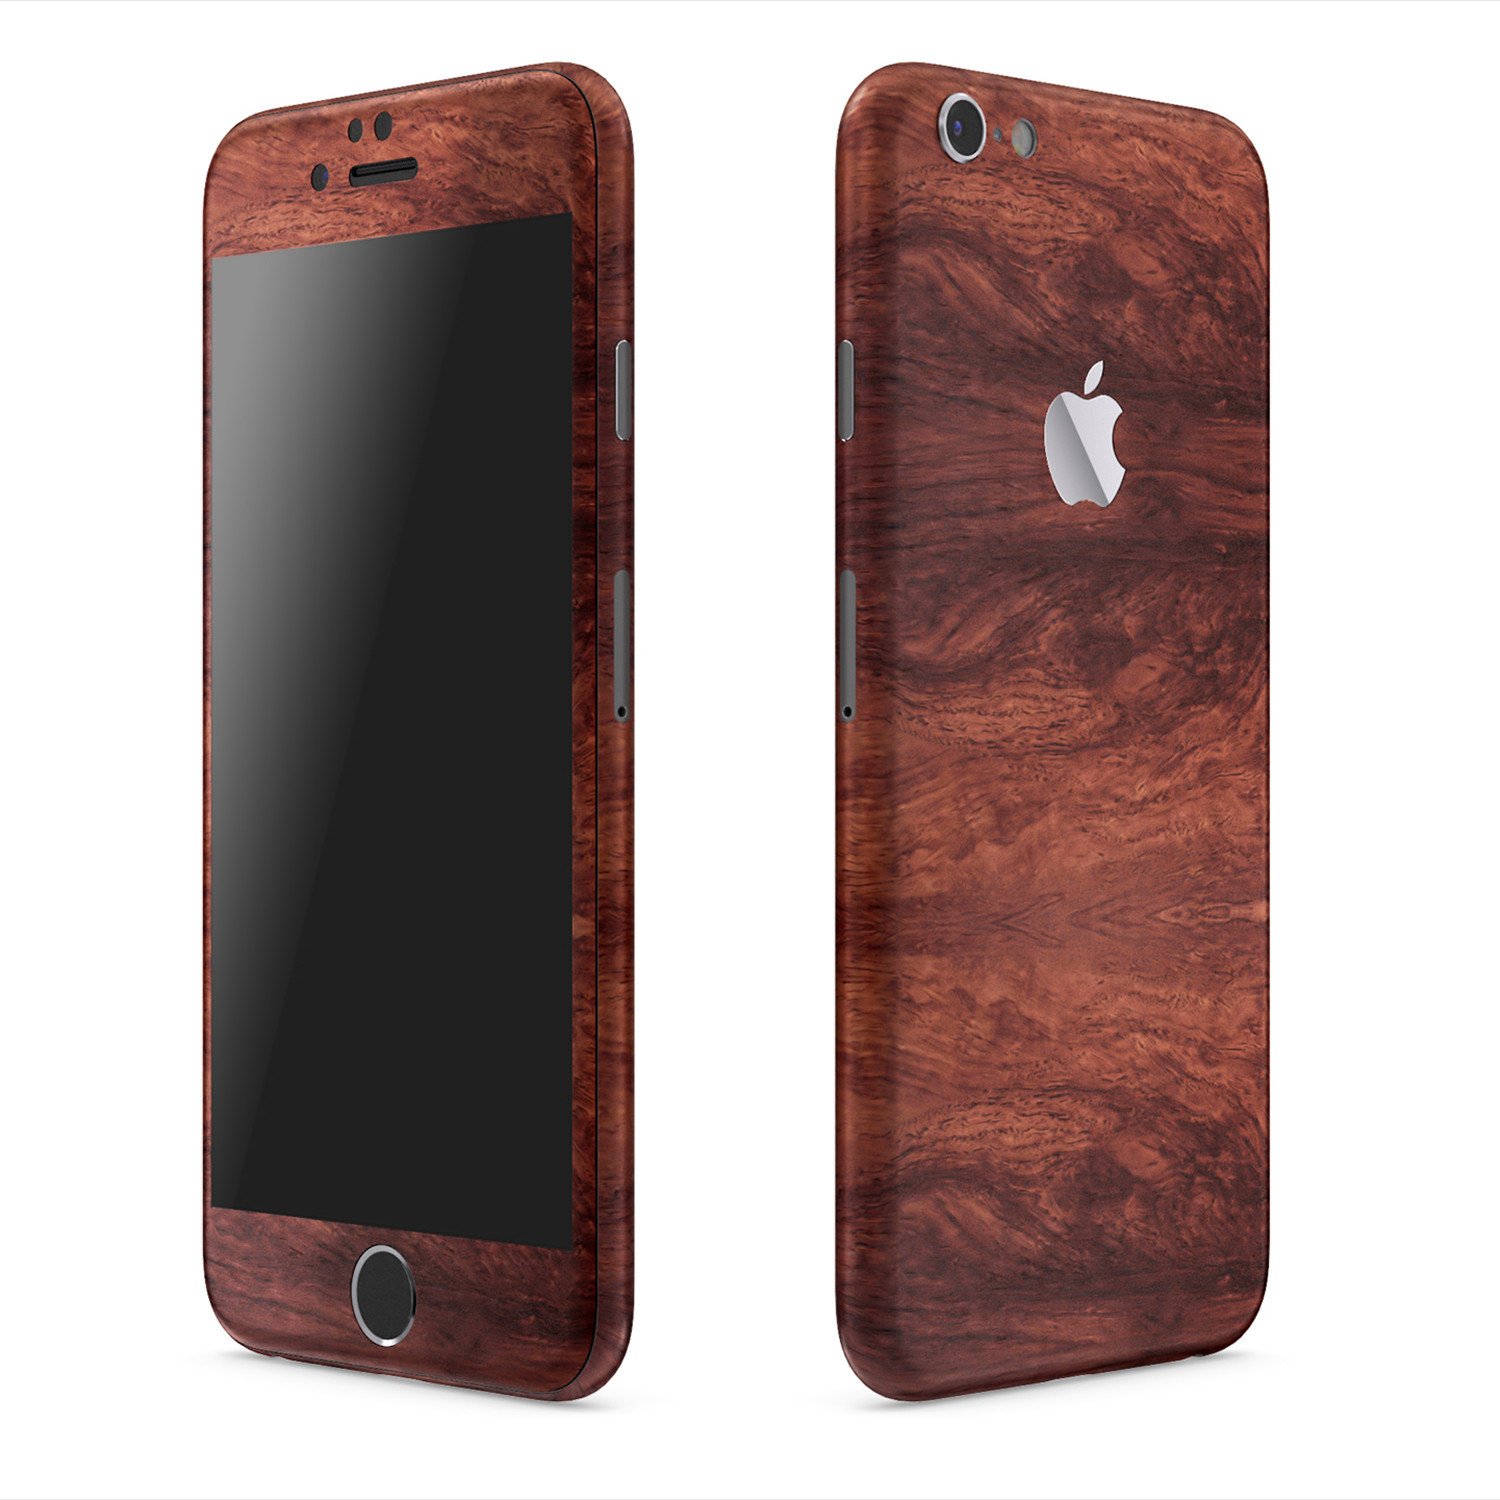 iphone 6 wood wrap